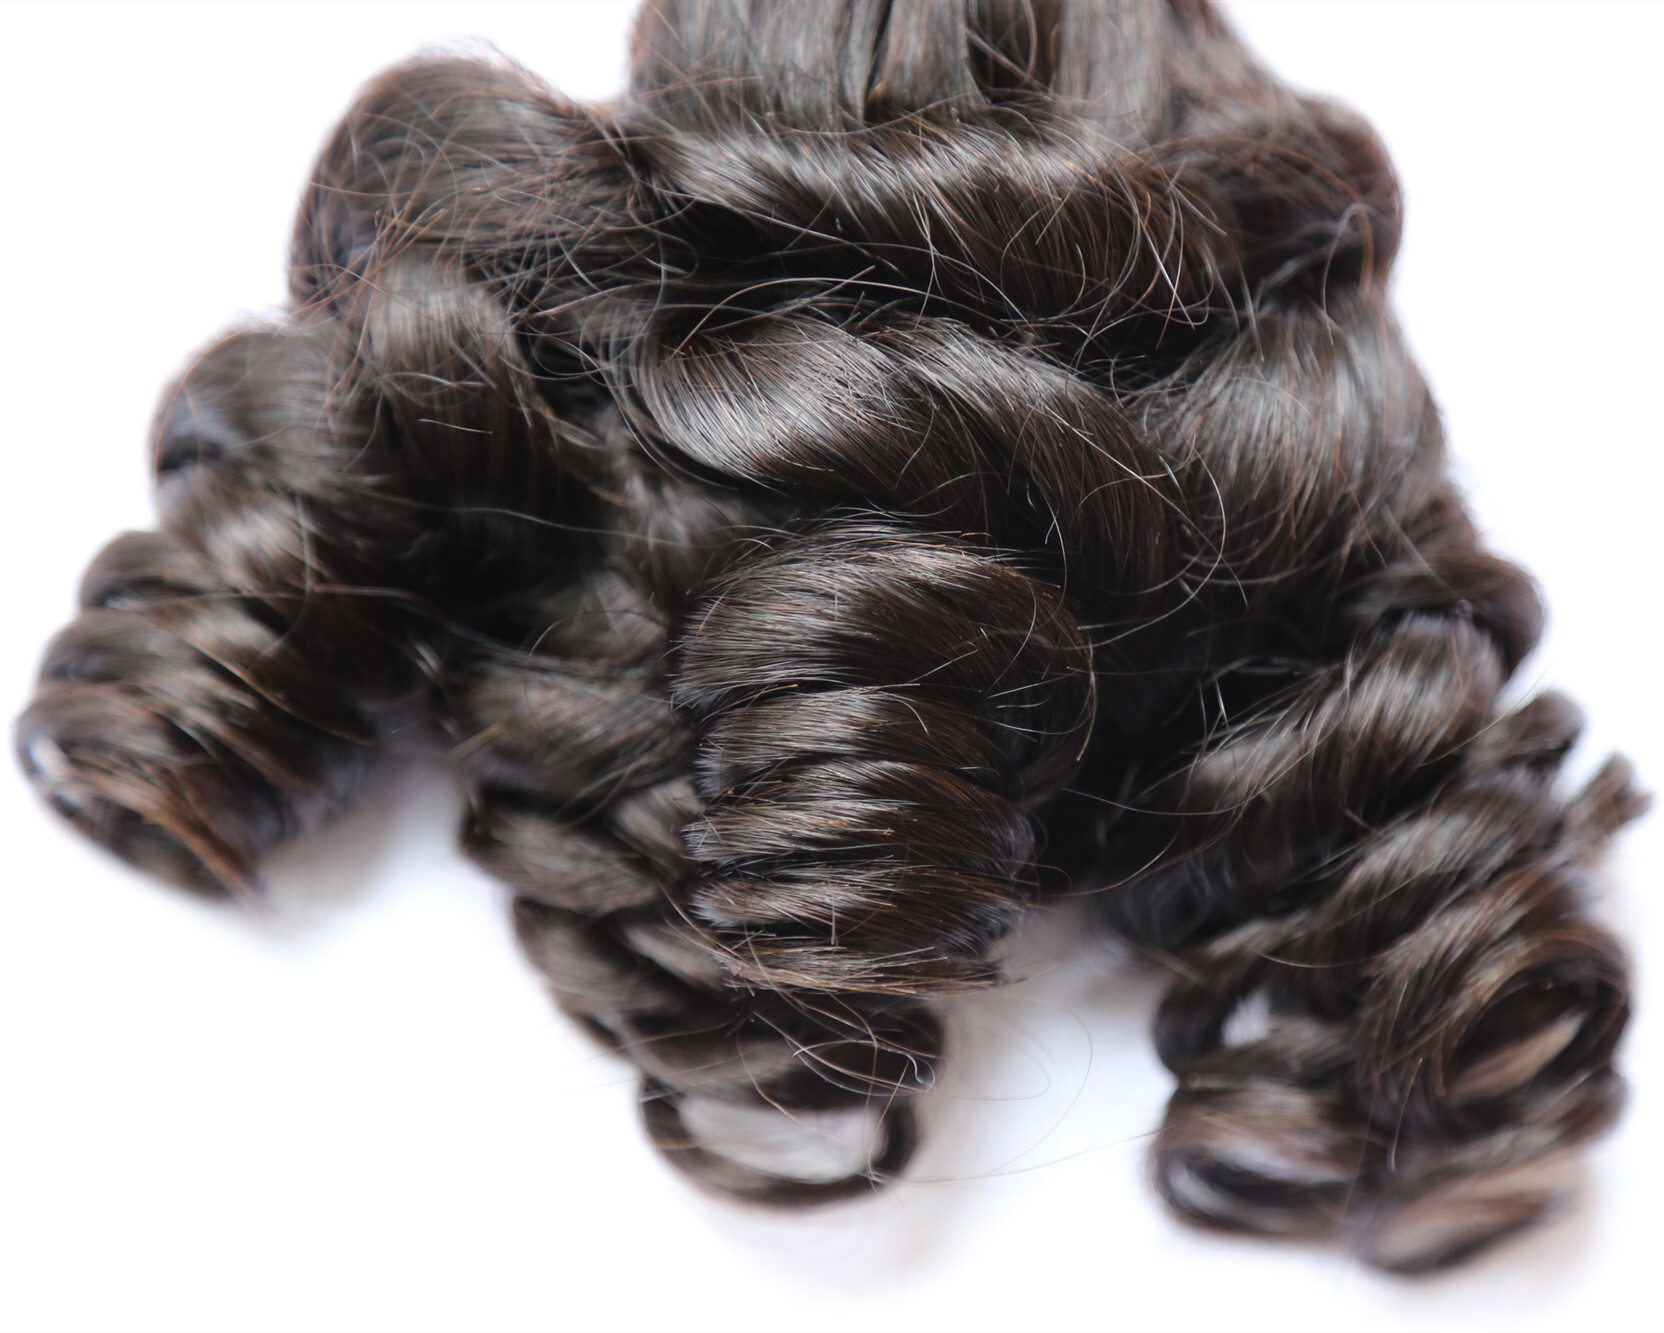 Hot Top Best Selling 10A Grade Funmi Hair Bundles With Good Price,Funmi Virgin Curly Human Hair